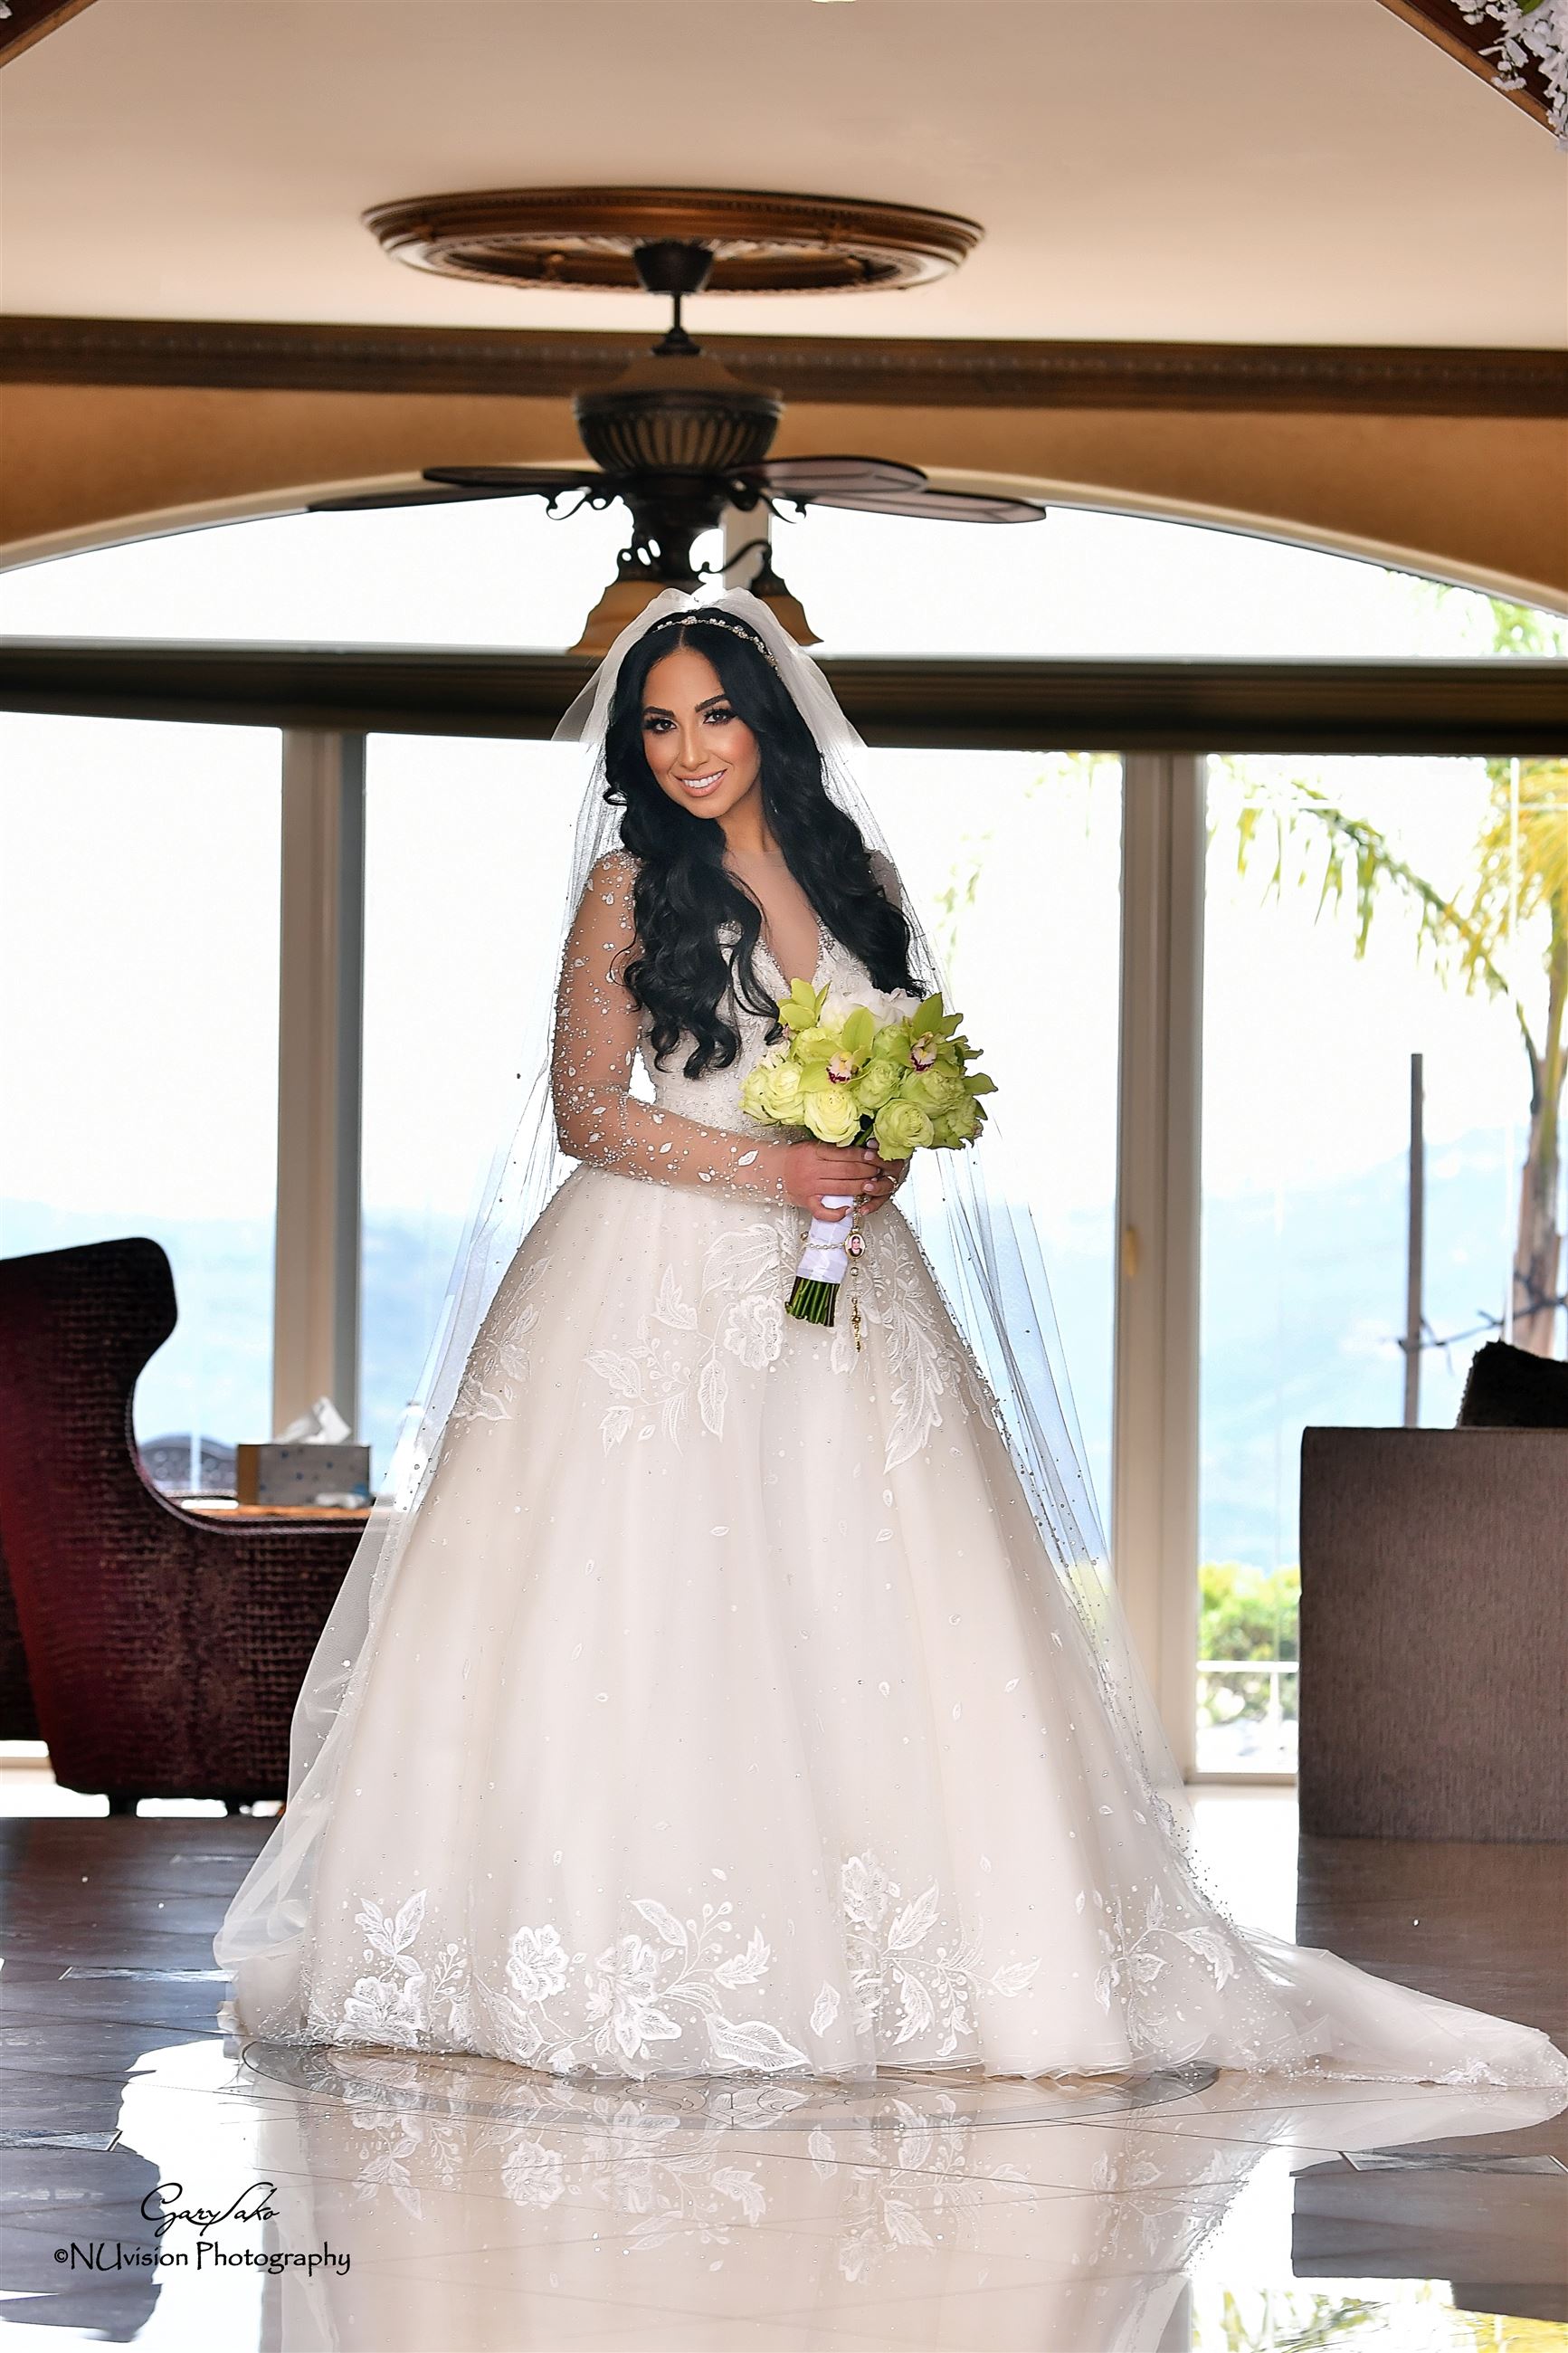 Sylvia gets married in Ines Di Santo!. Desktop Image